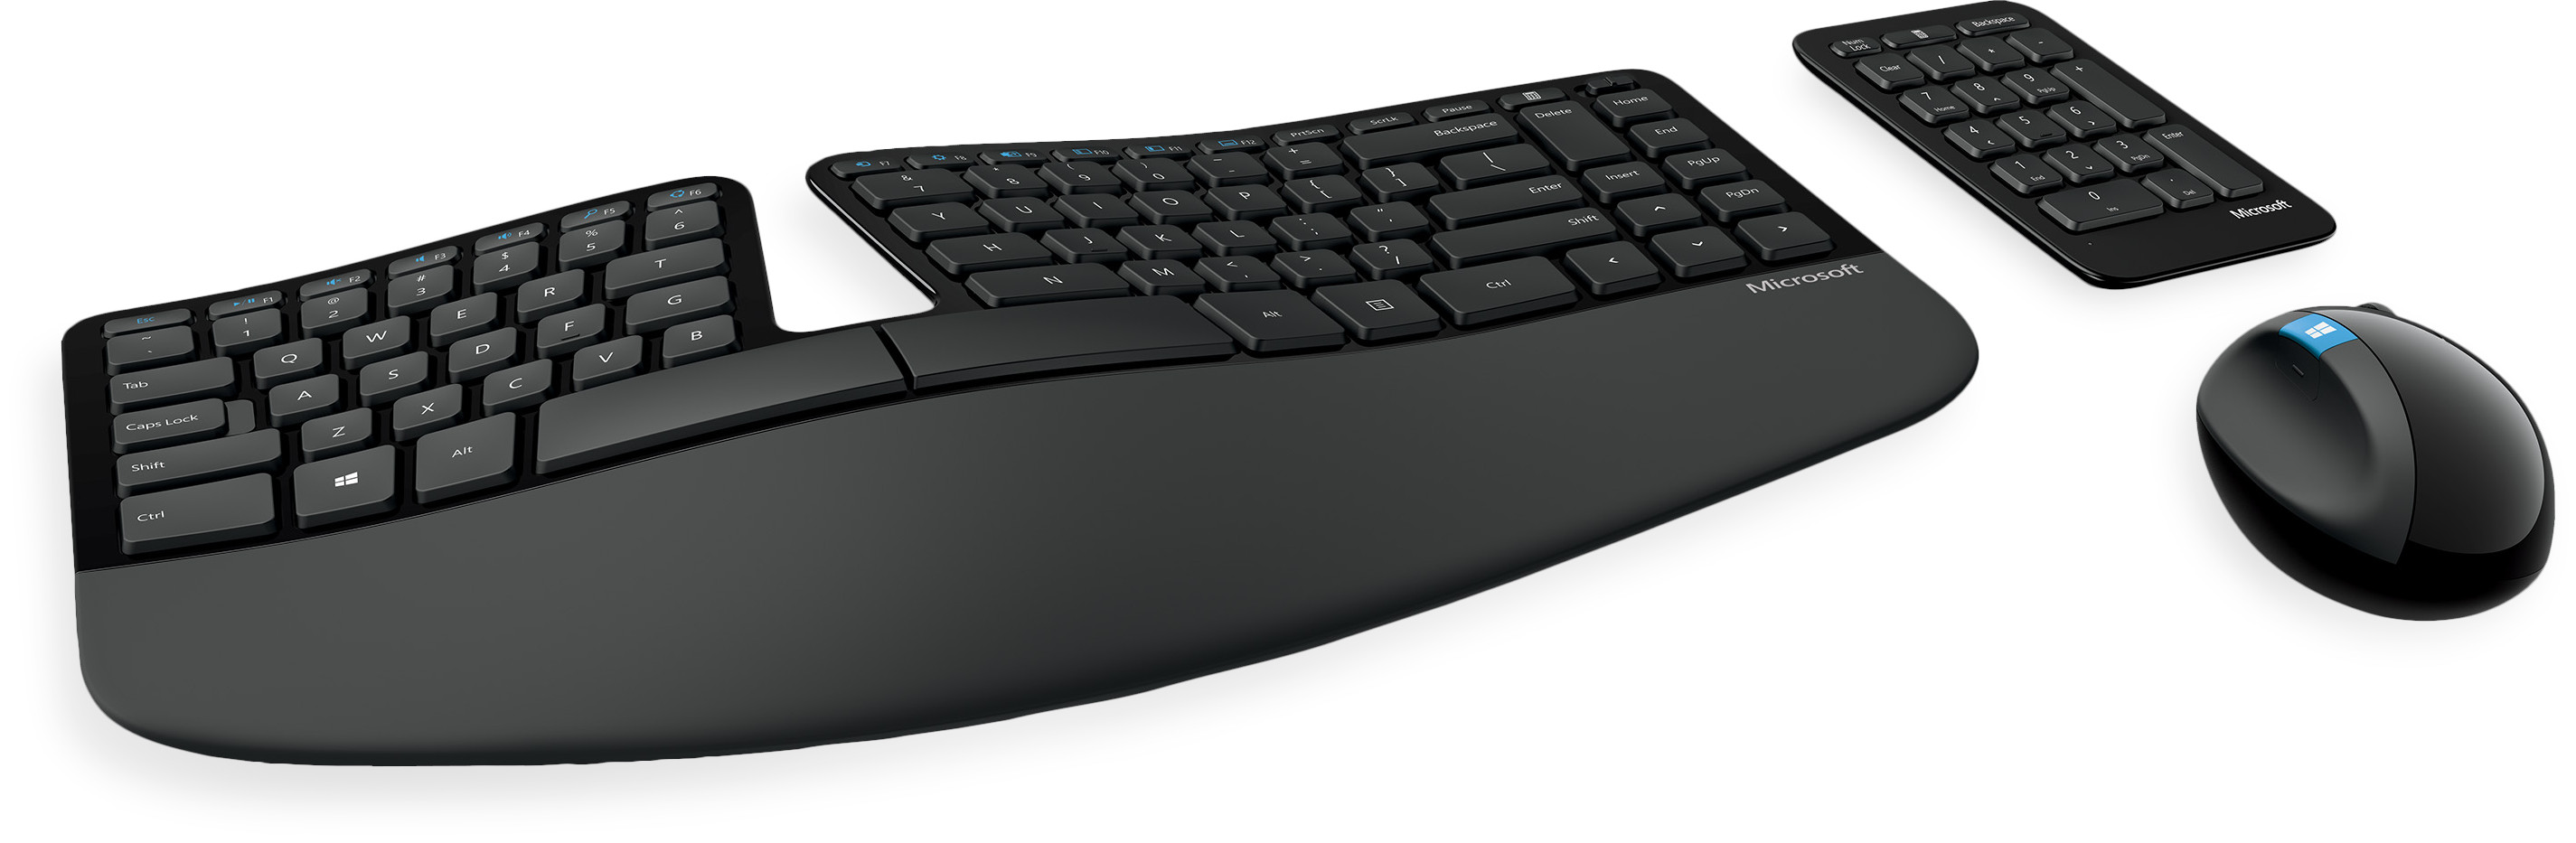 Sculpt ergonomic keyboard